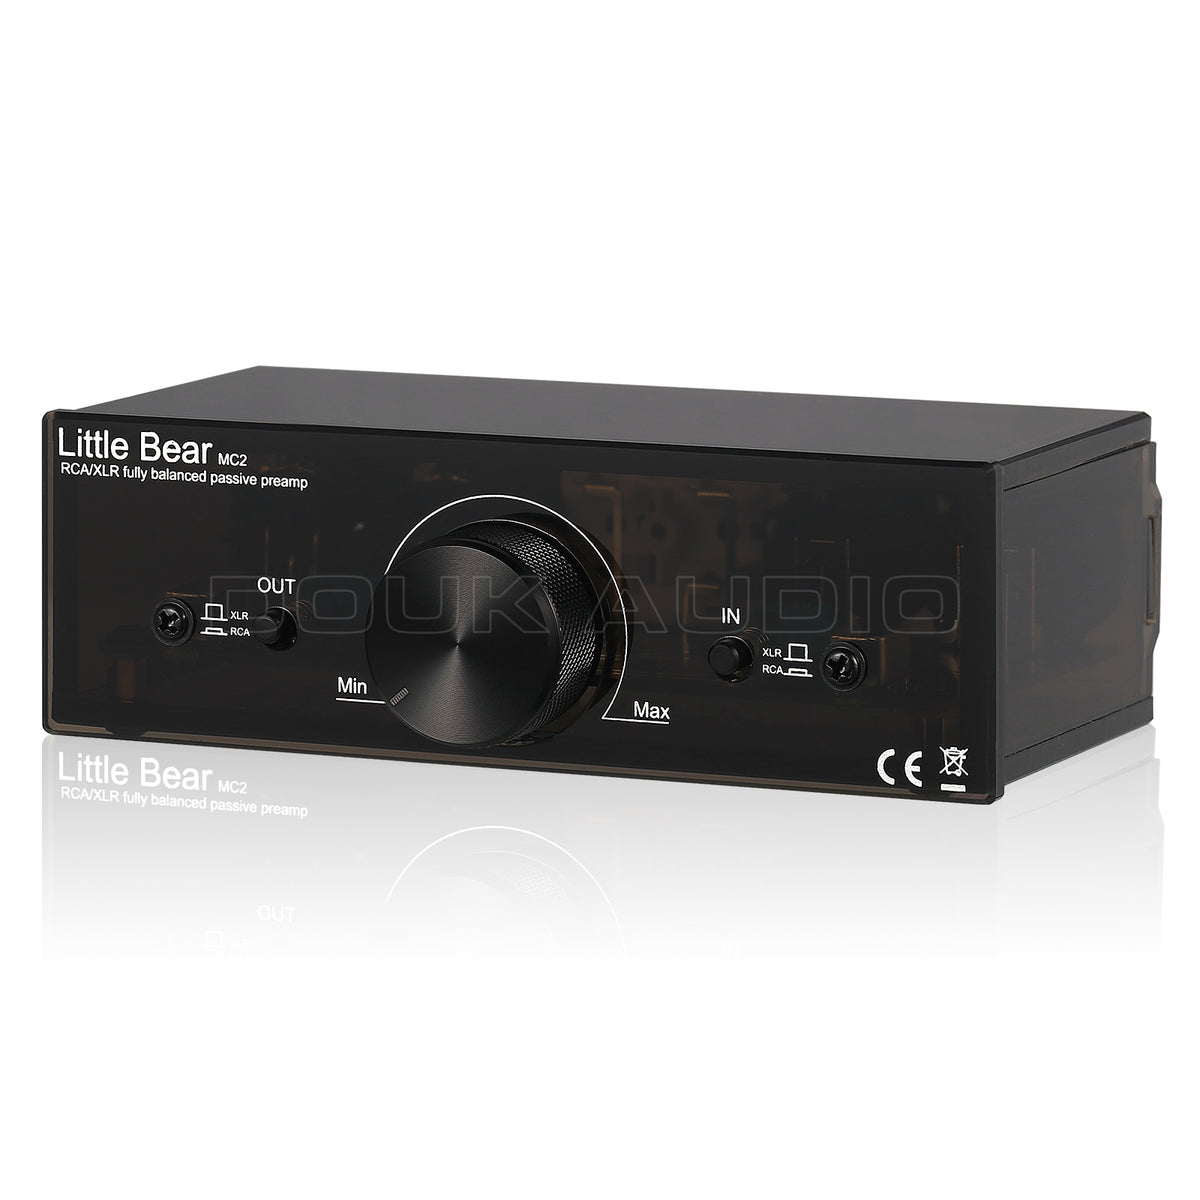 Little Bear MC2 Mini 2-Way Fully Balanced XLR/RCA Audio Converter Swit–  doukaudio